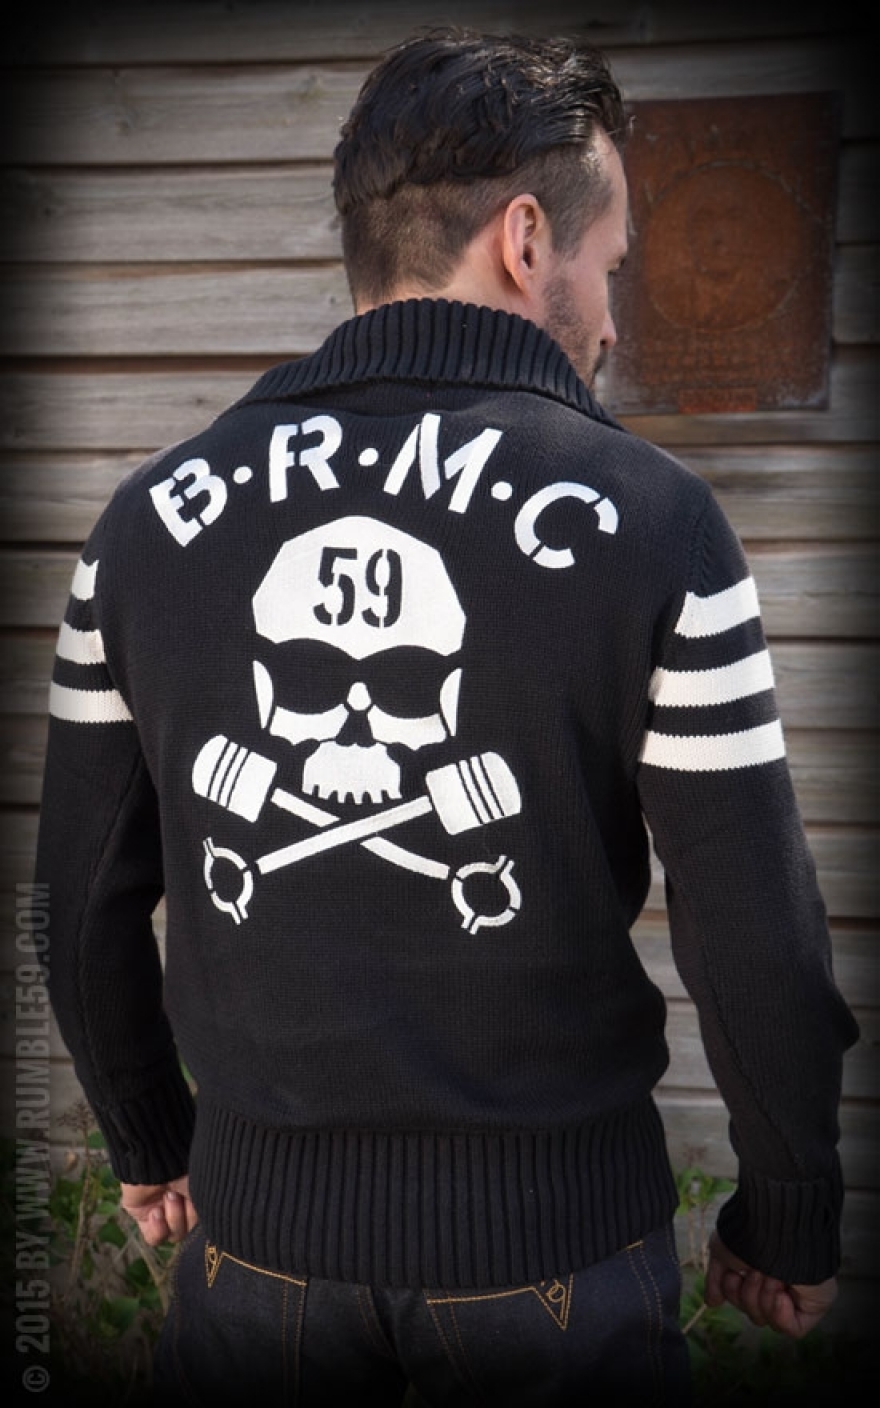 racing_club_sweater-BRMC-rueckenansicht.jpg